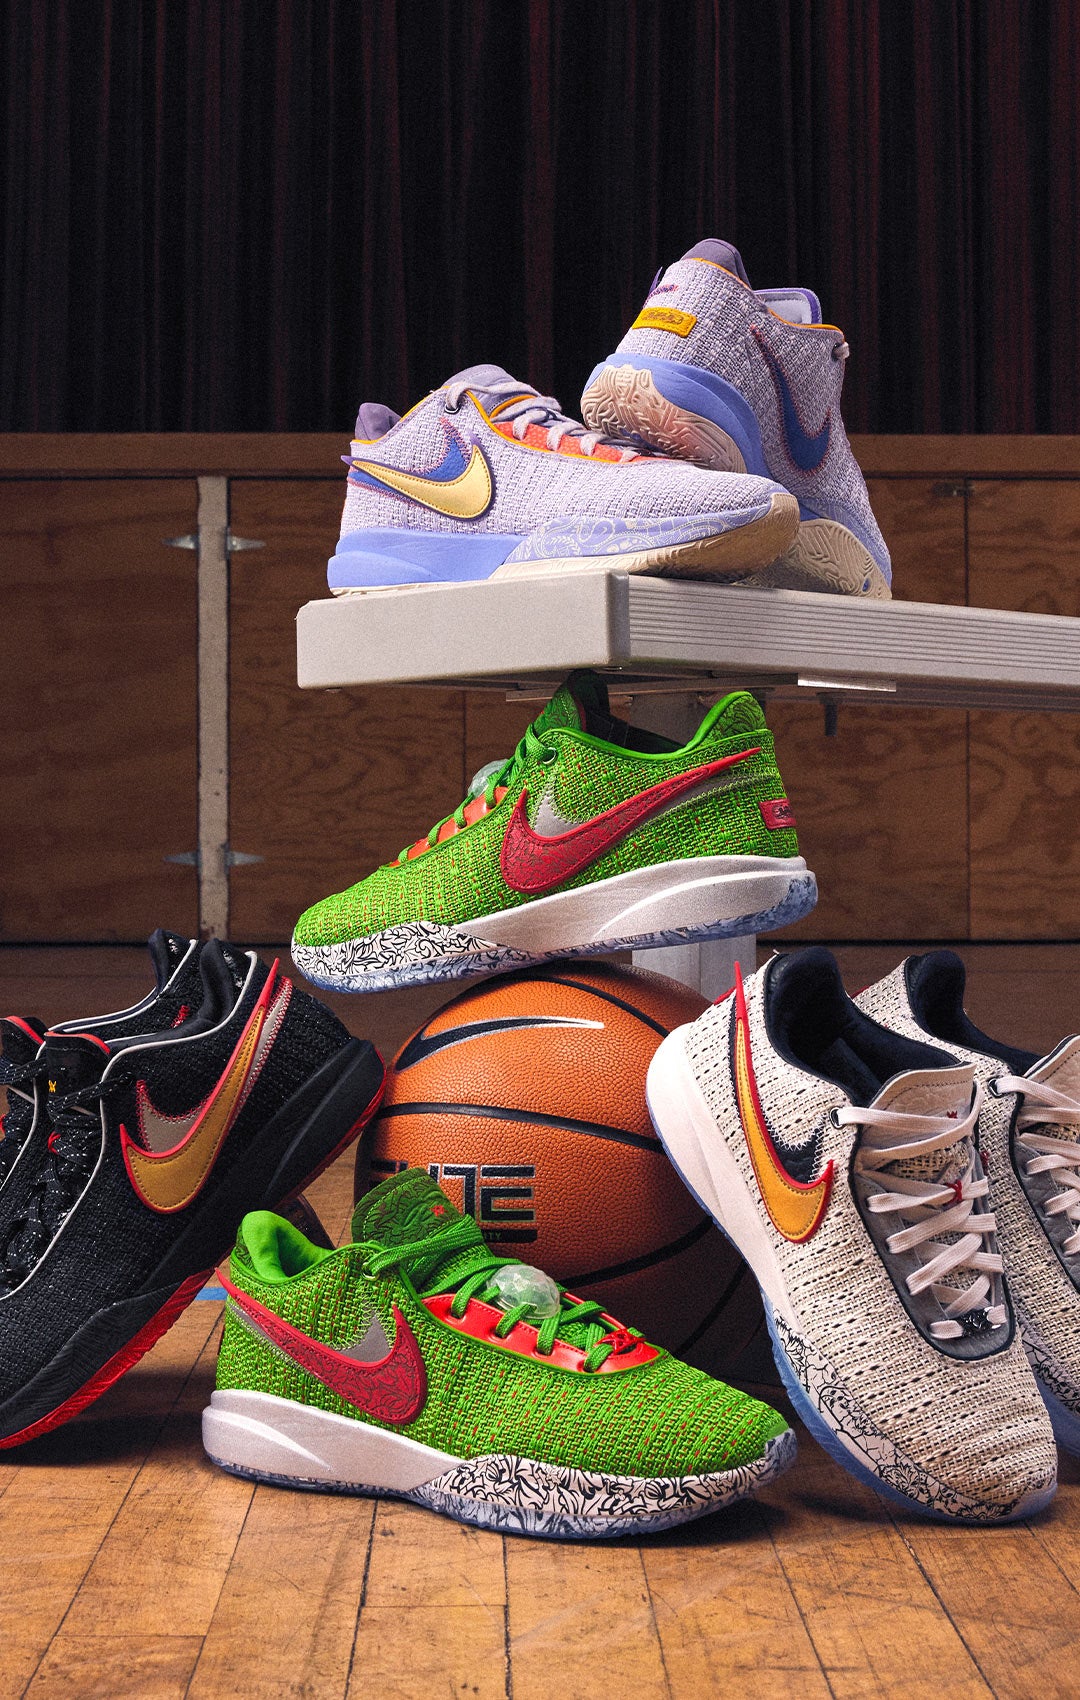 doos Betrokken beweging Nike Shoes, Apparel, and Accessories | Foot Locker